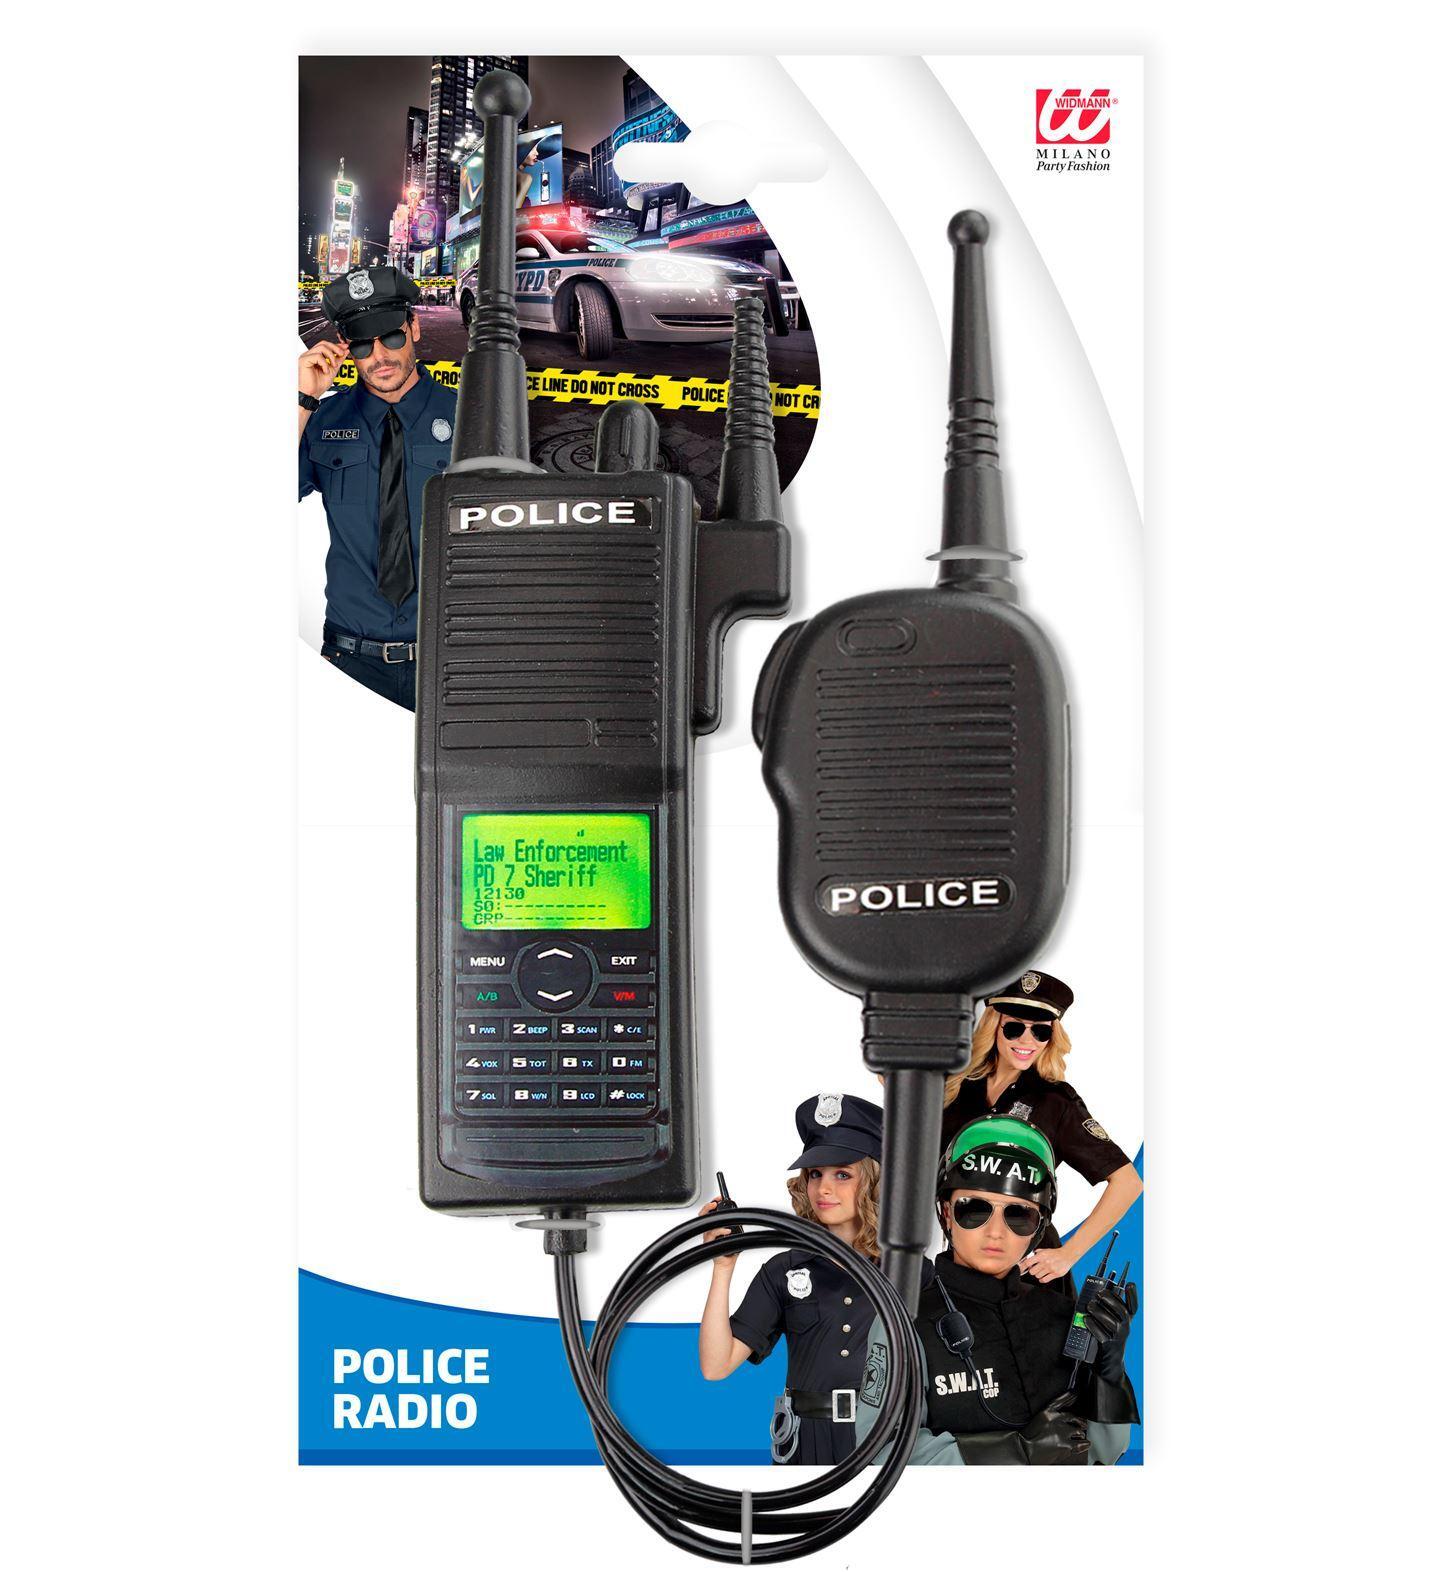 Politie radio walkie talkie!